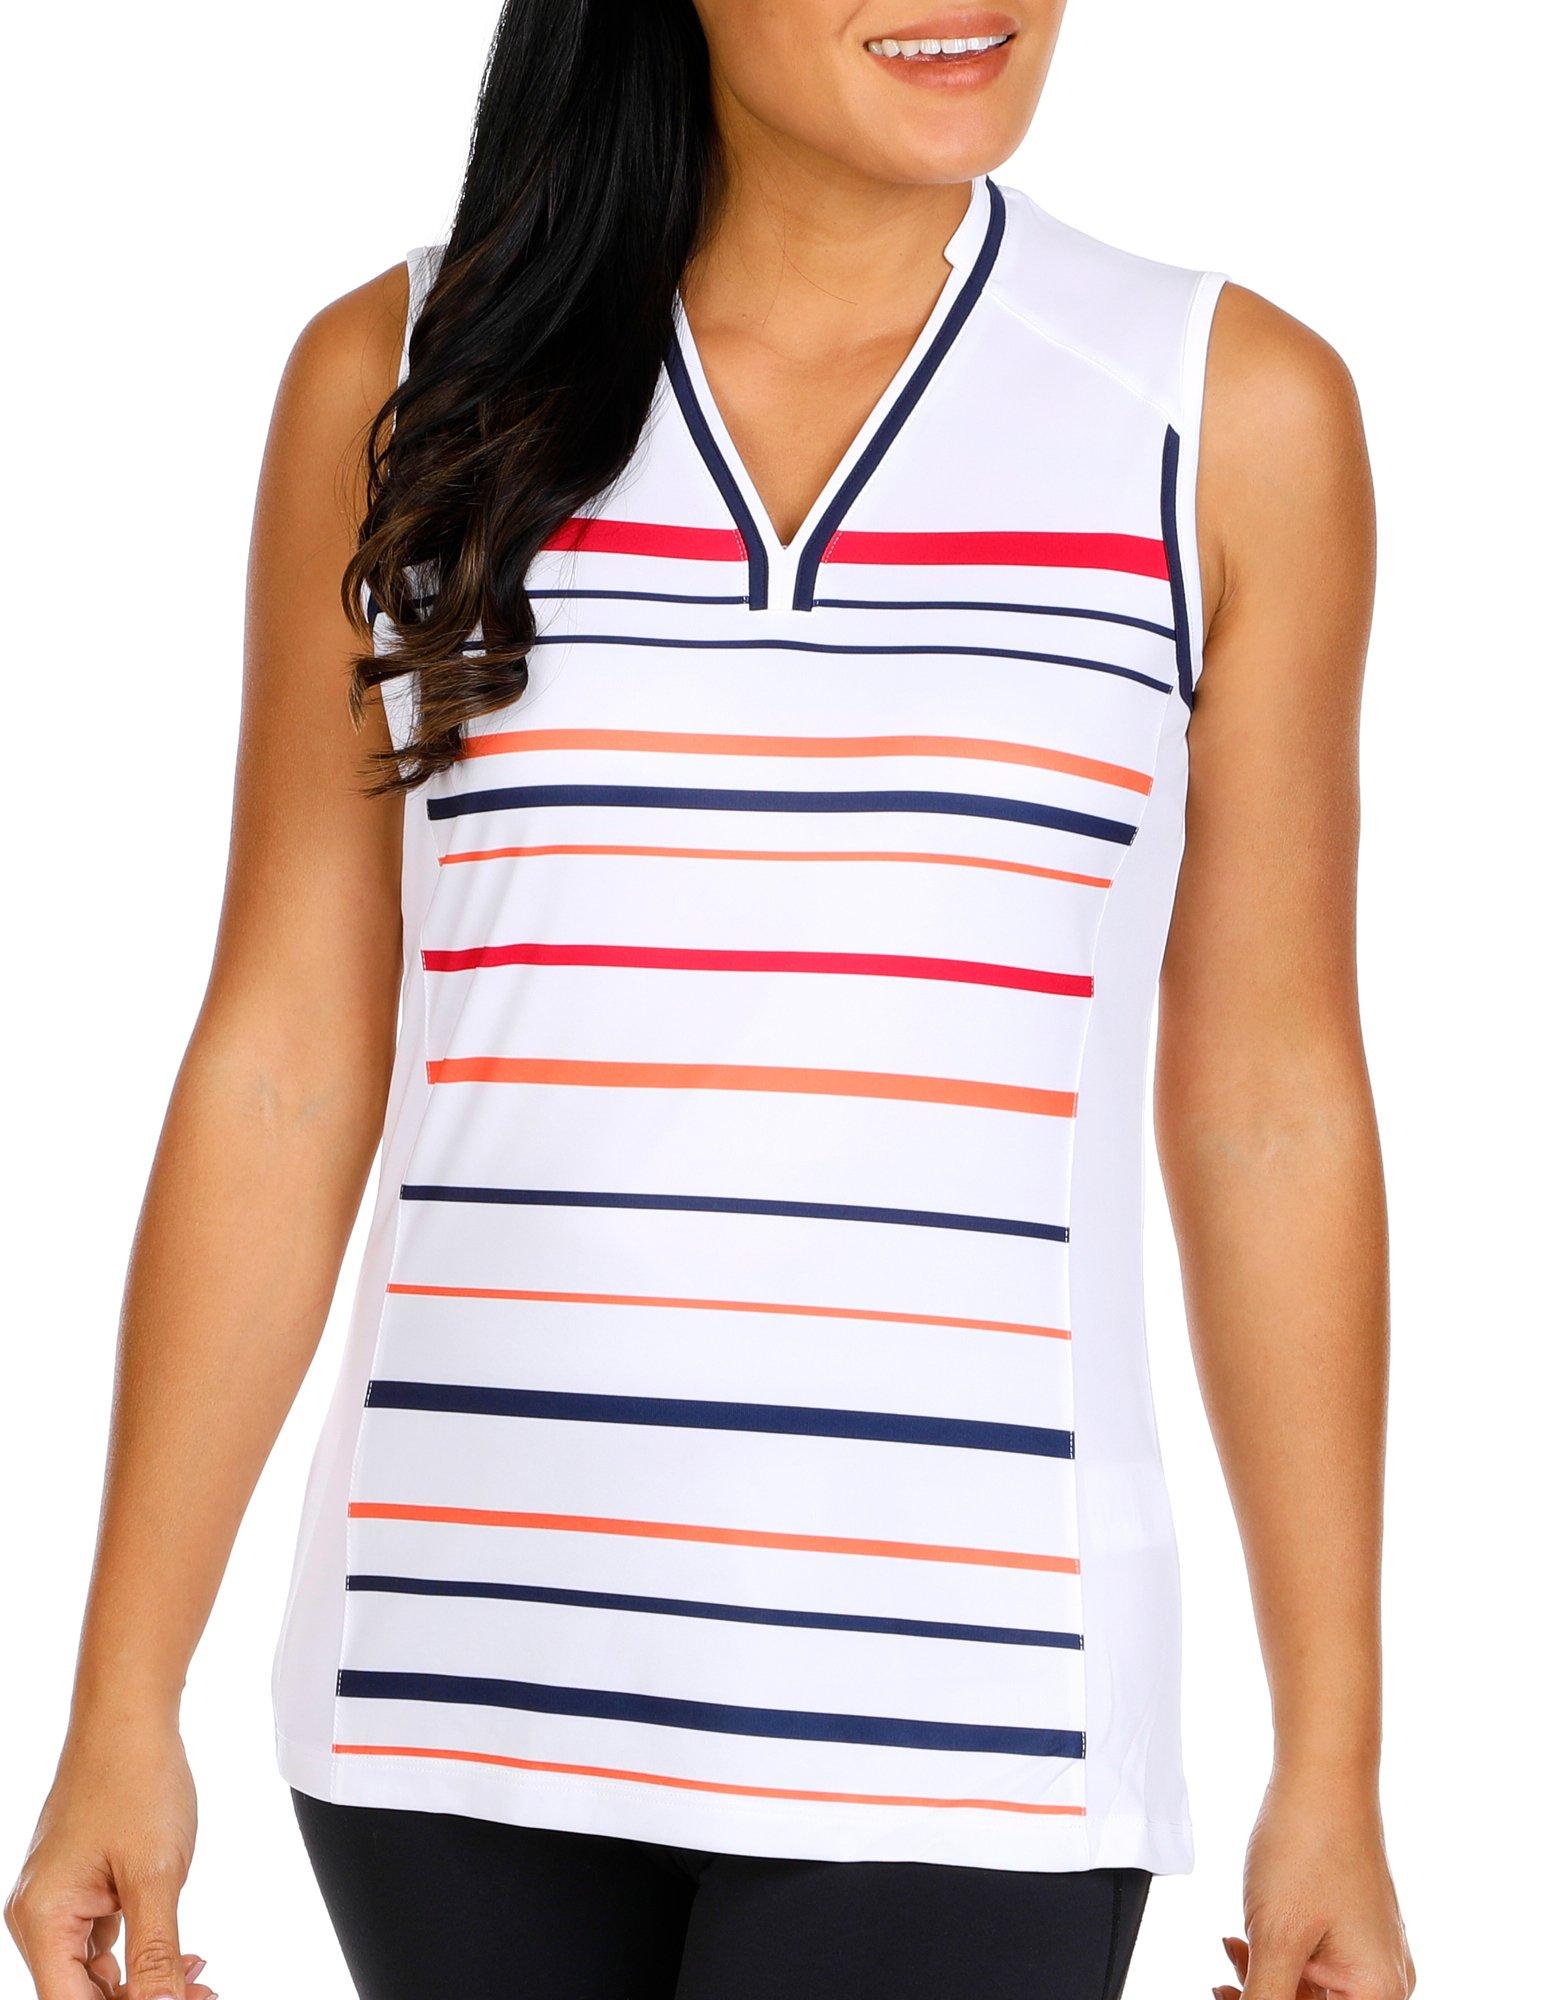 Women's Active Golf Sleeveless Striped Top